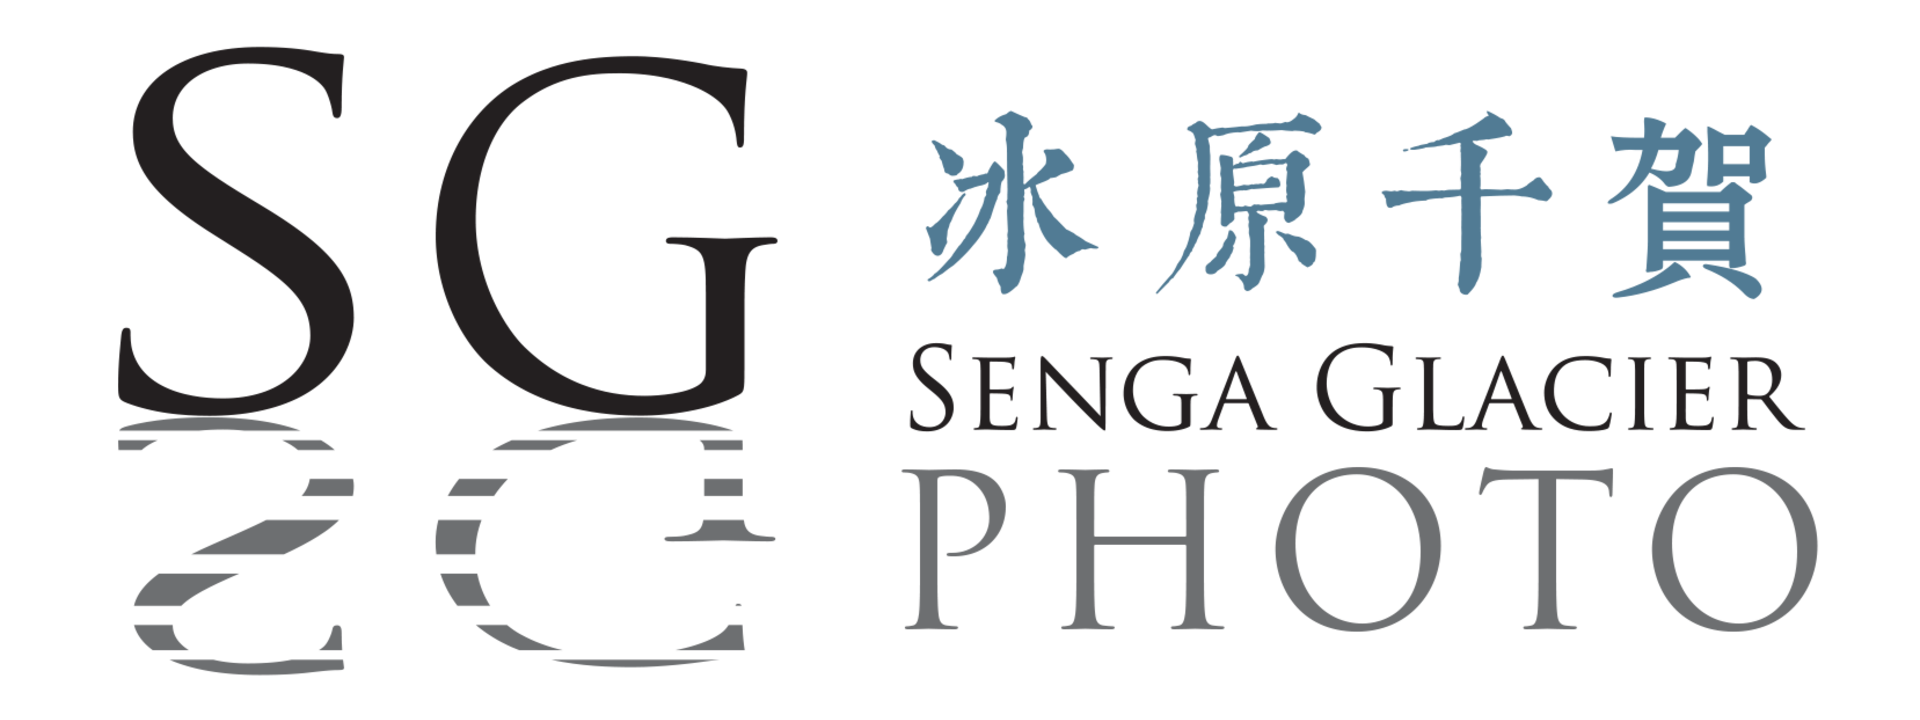 logo-sg-L.png